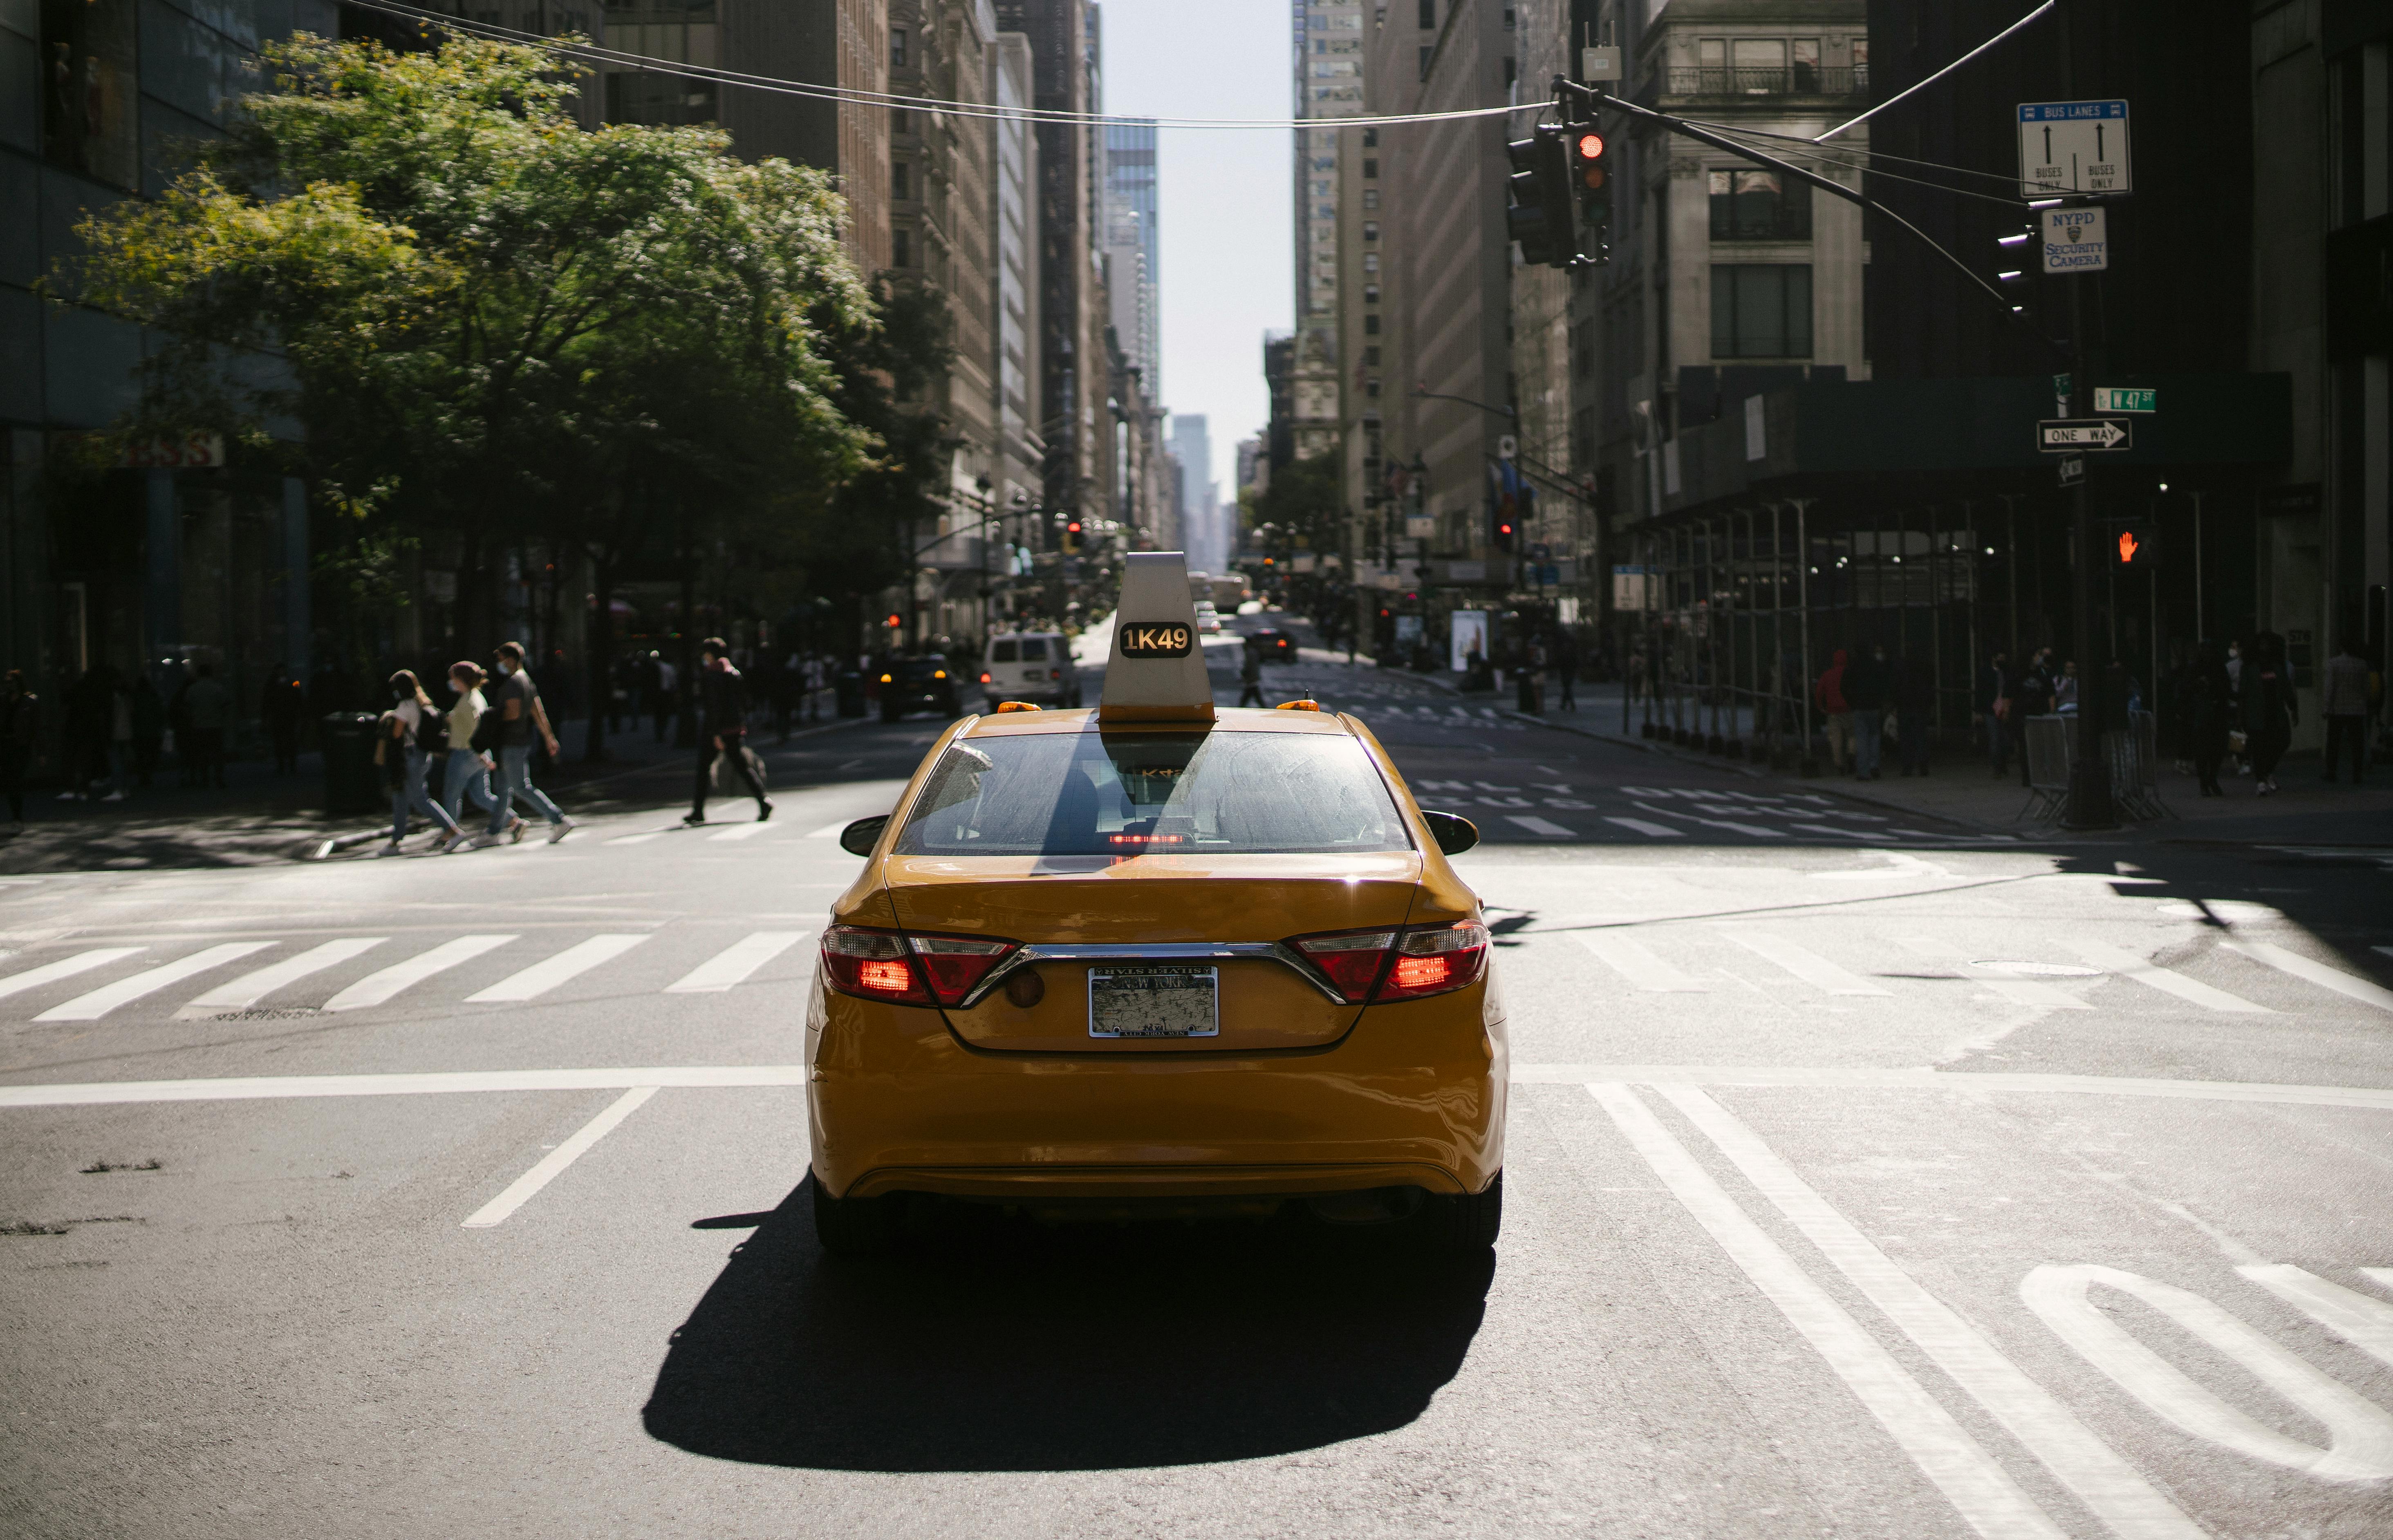 modern yellow cab on city road